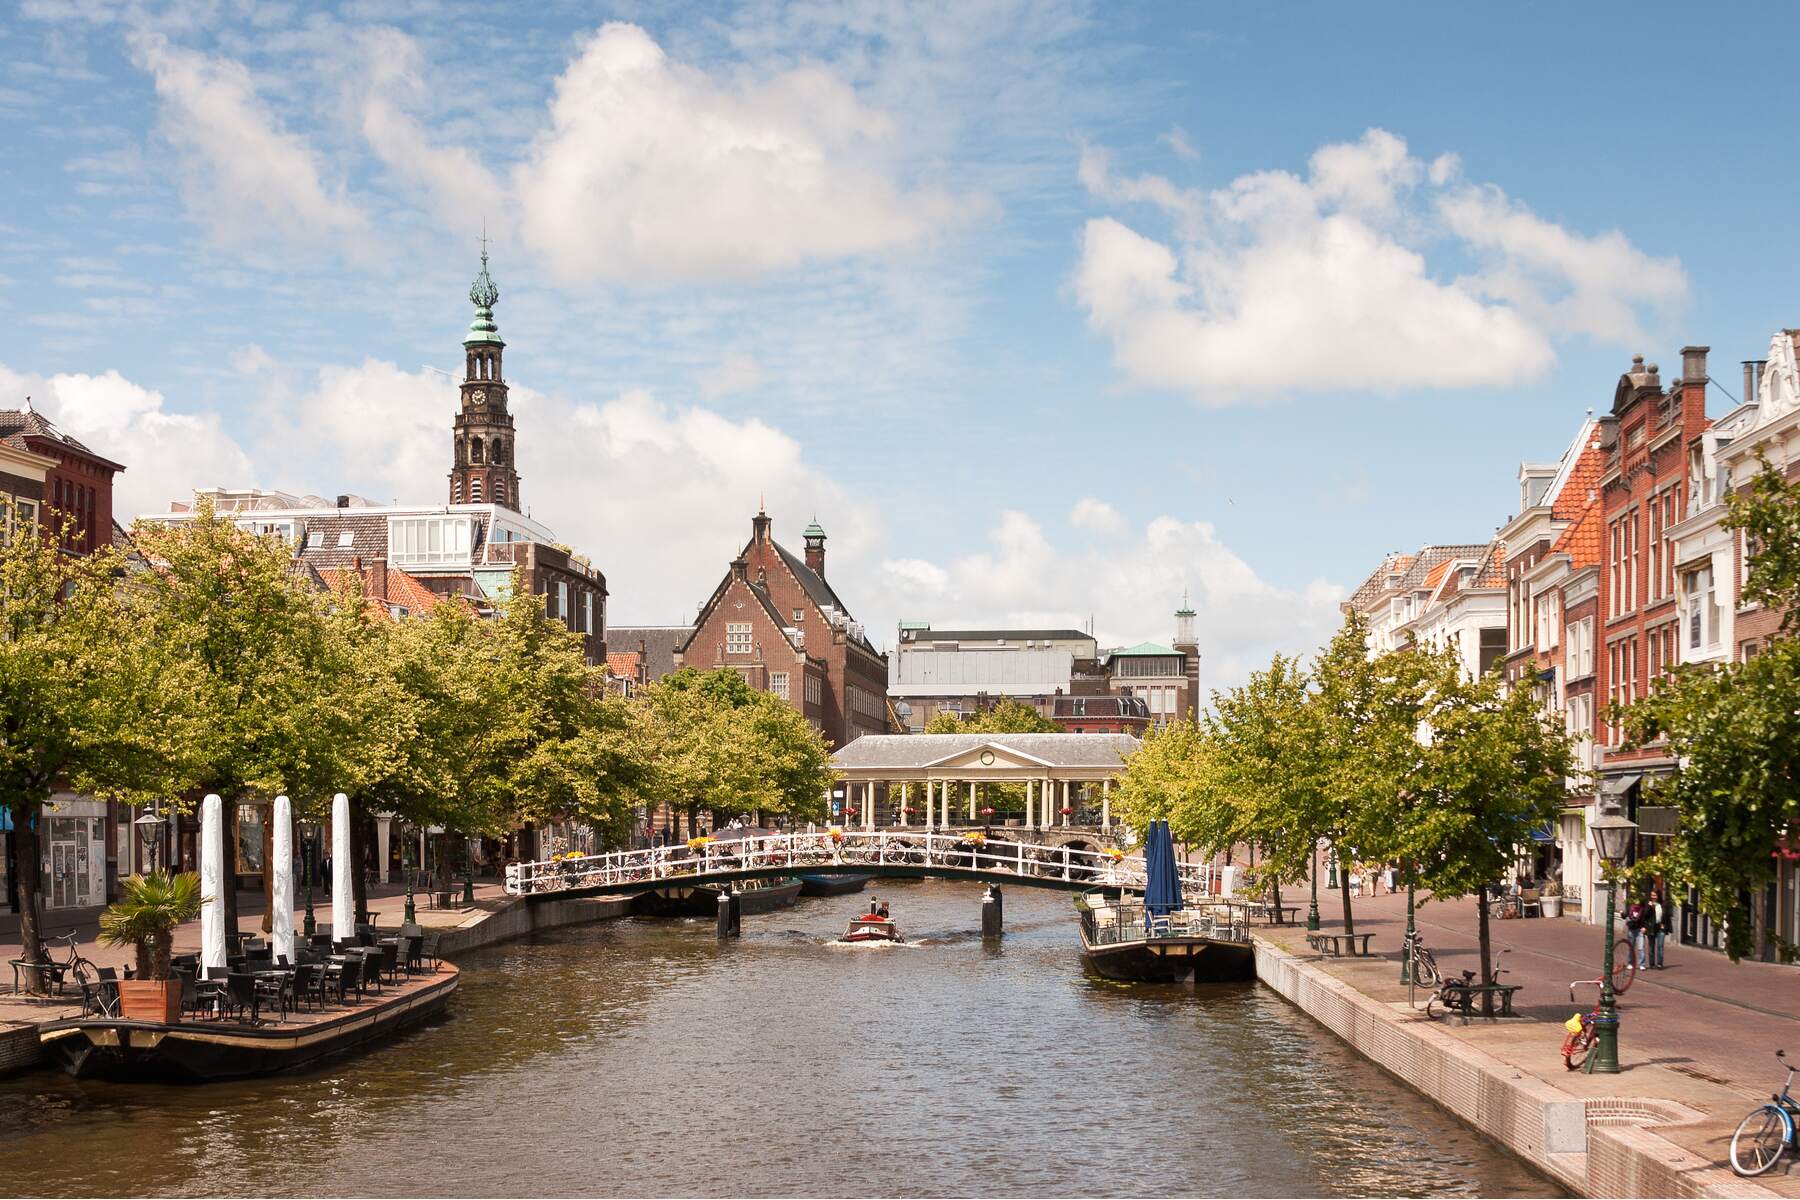 Canal in Leiden city center